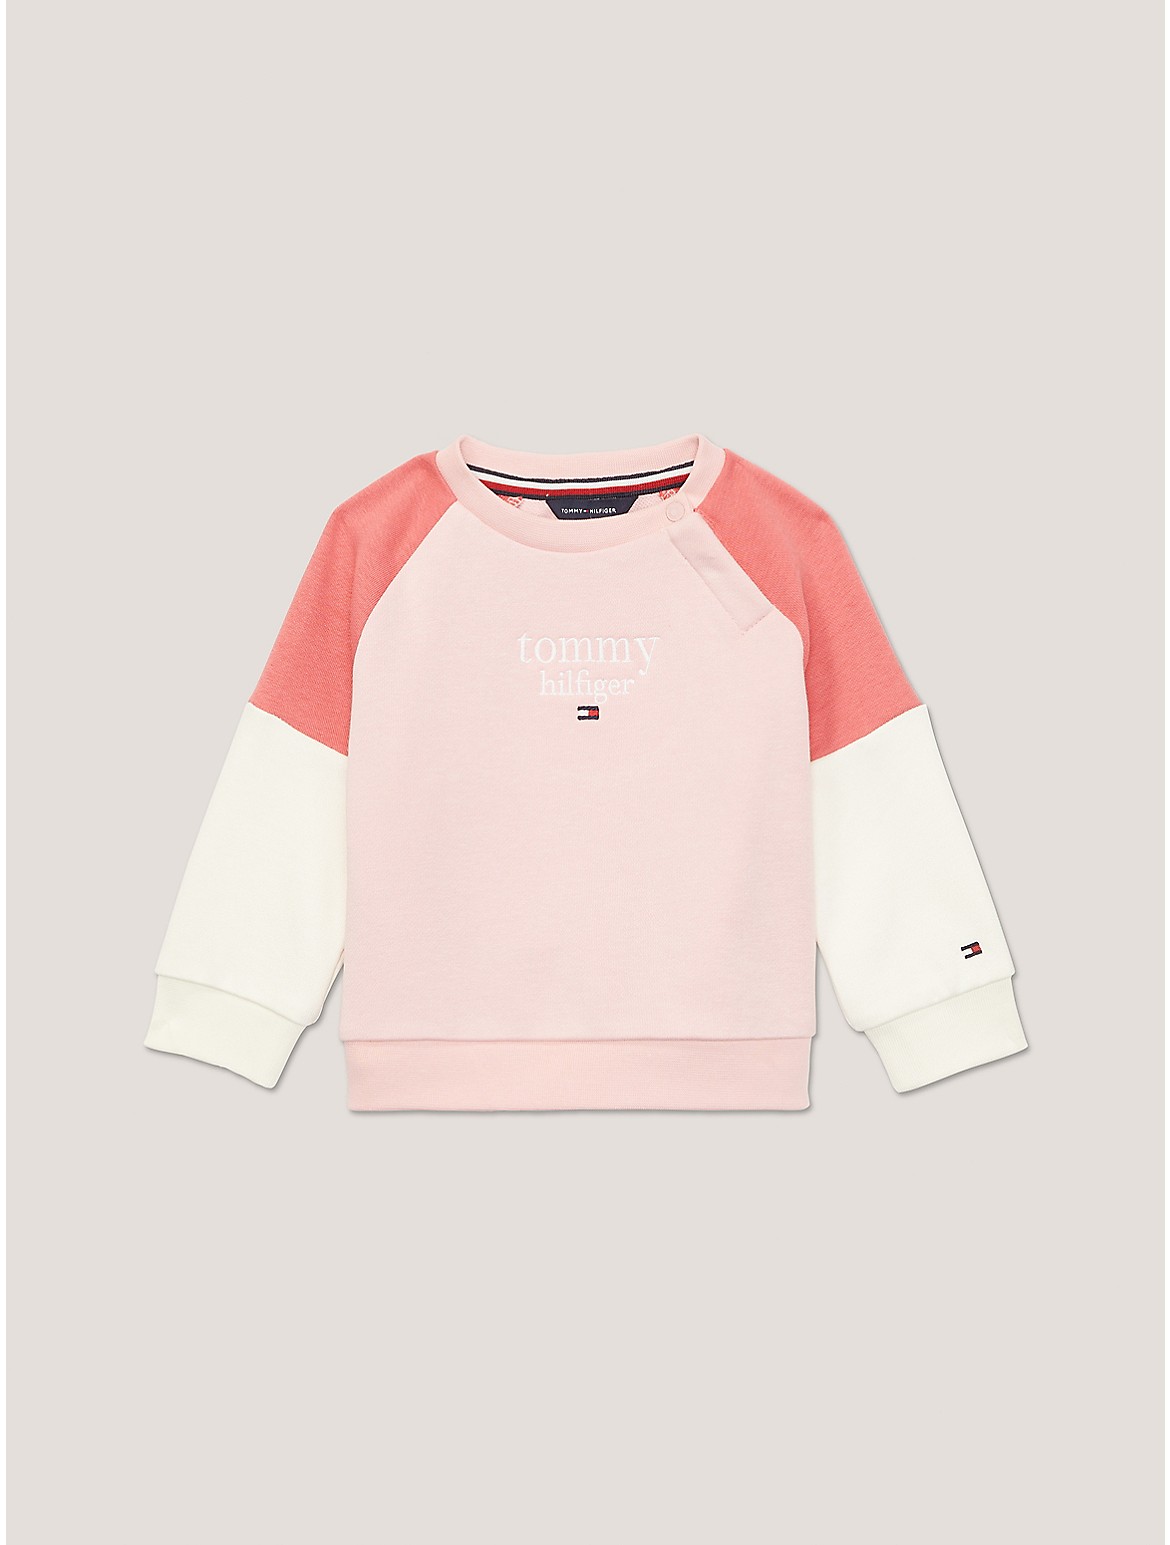 Tommy Hilfiger Girls' Babies' Colorblock Crewneck - Pink - 18M